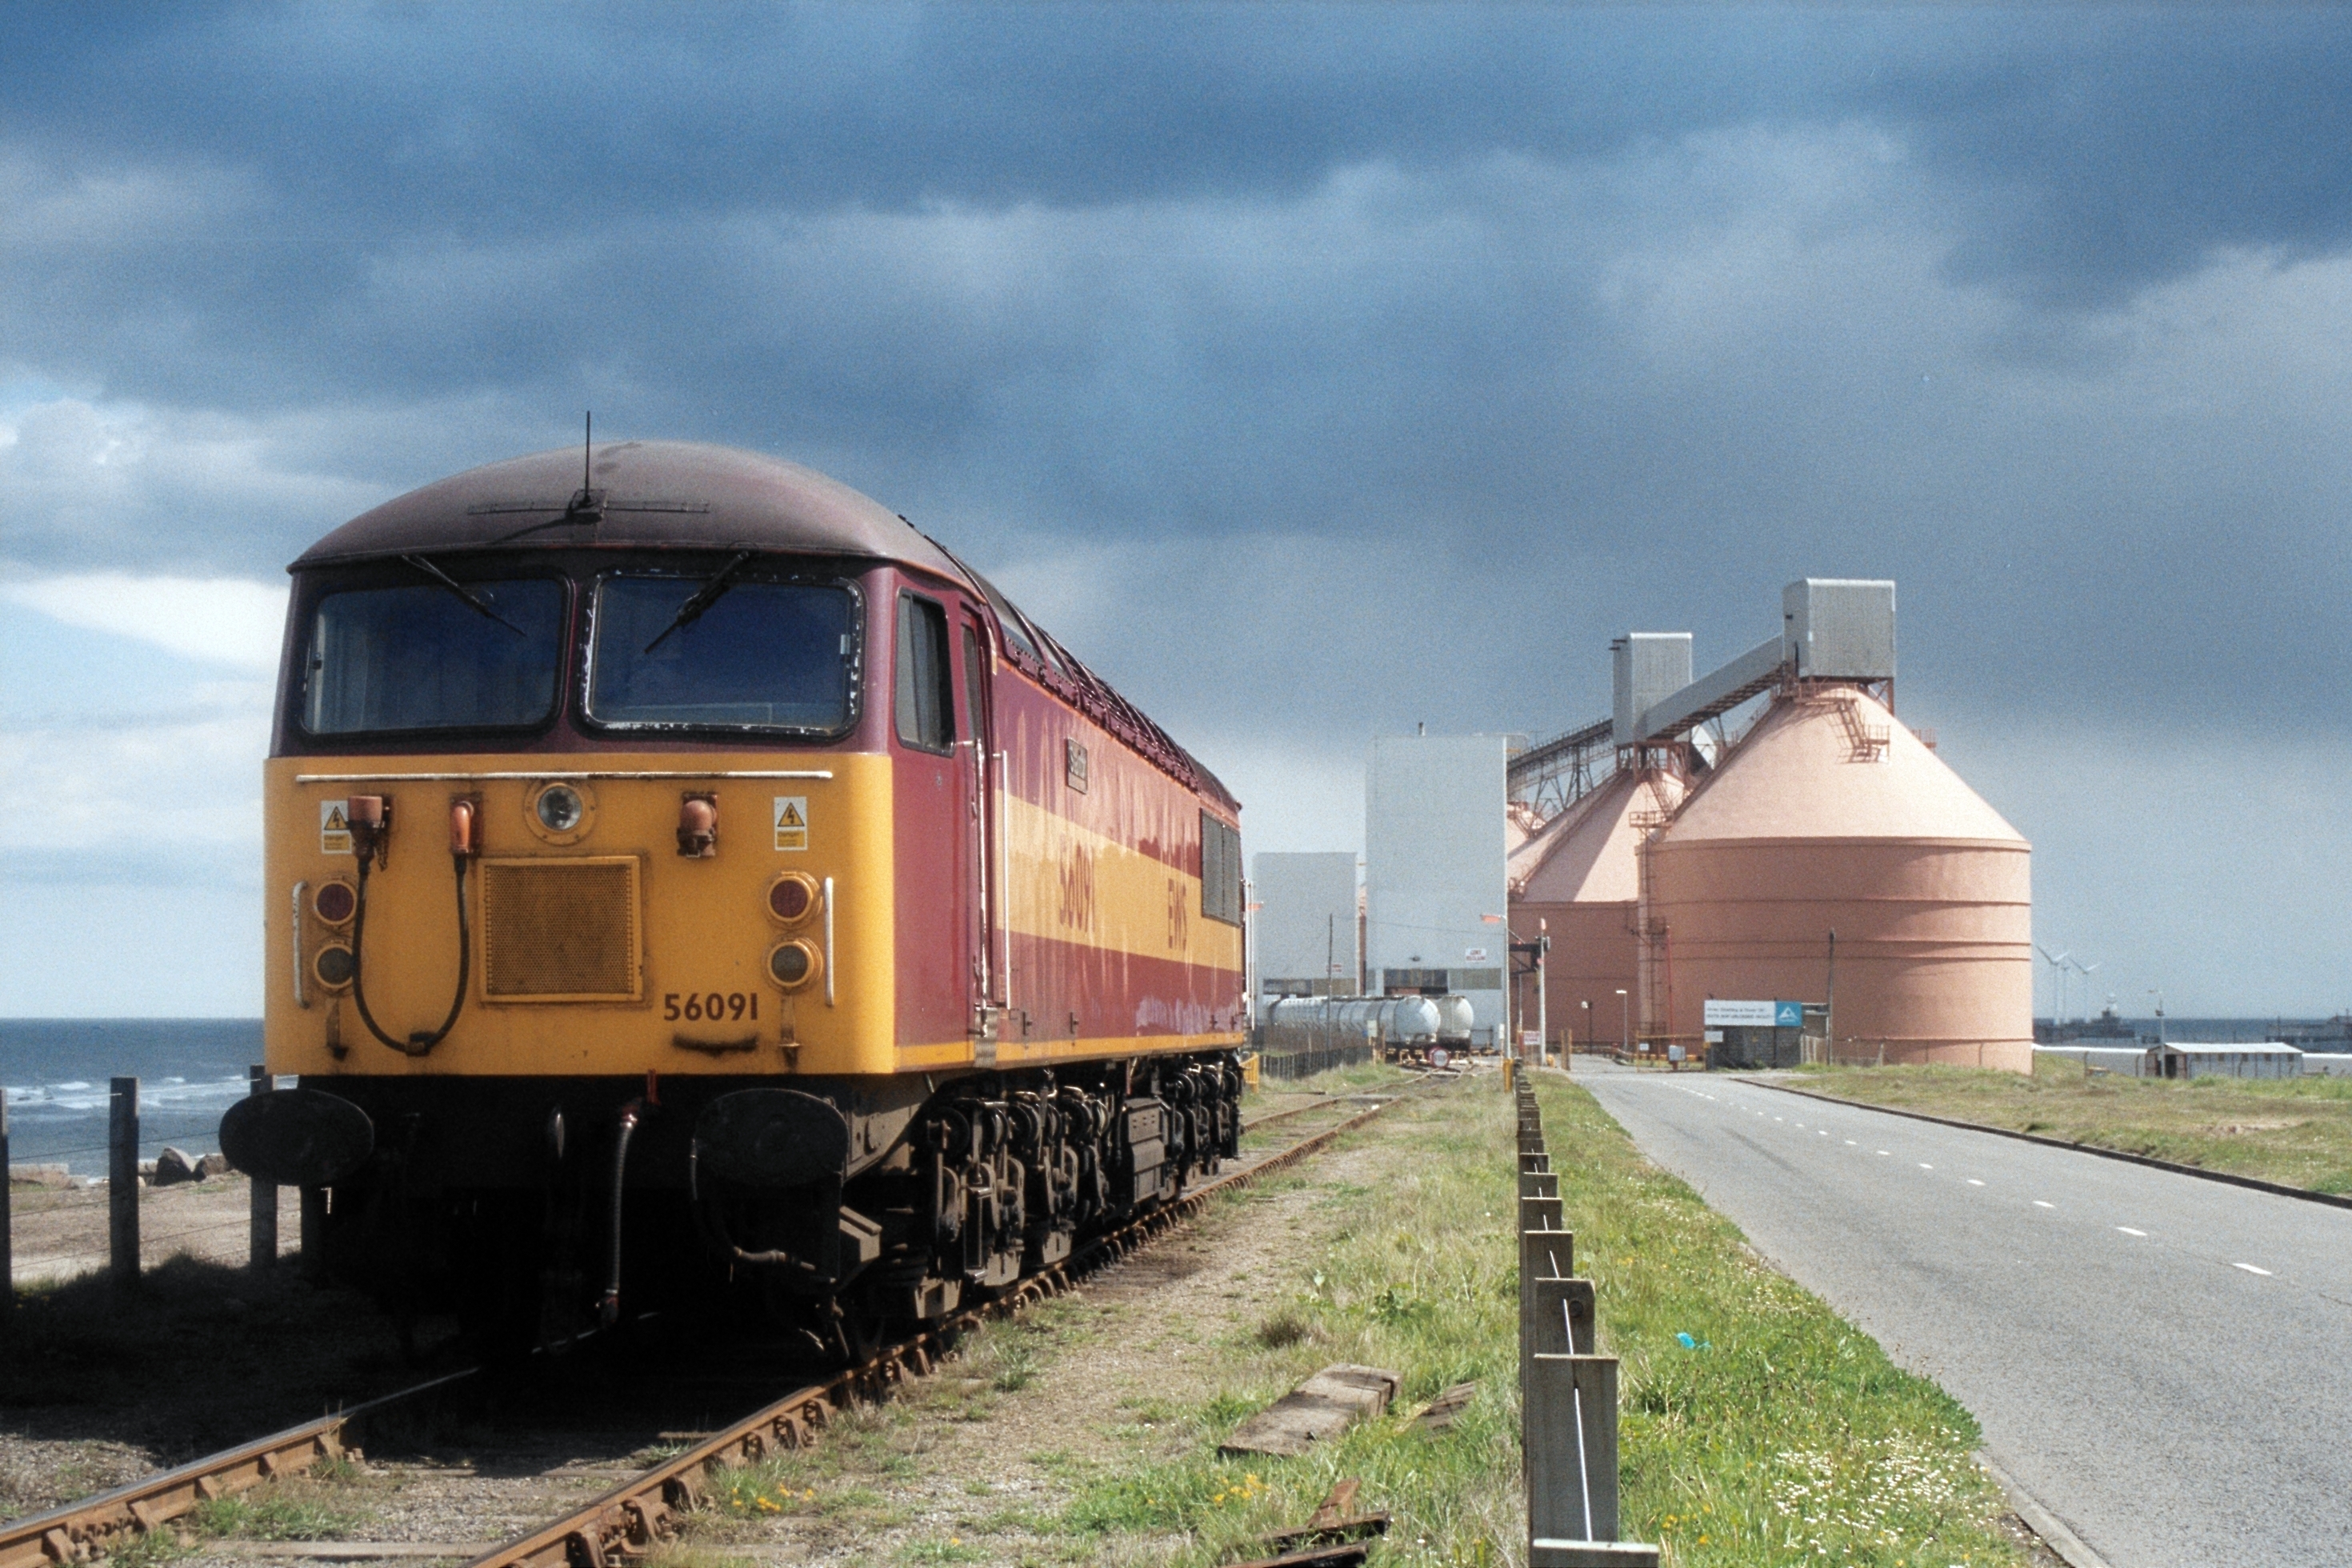 [
56091 "Stanton" running round its train at North Blyth.  Monday 29 May 2000.
        ]